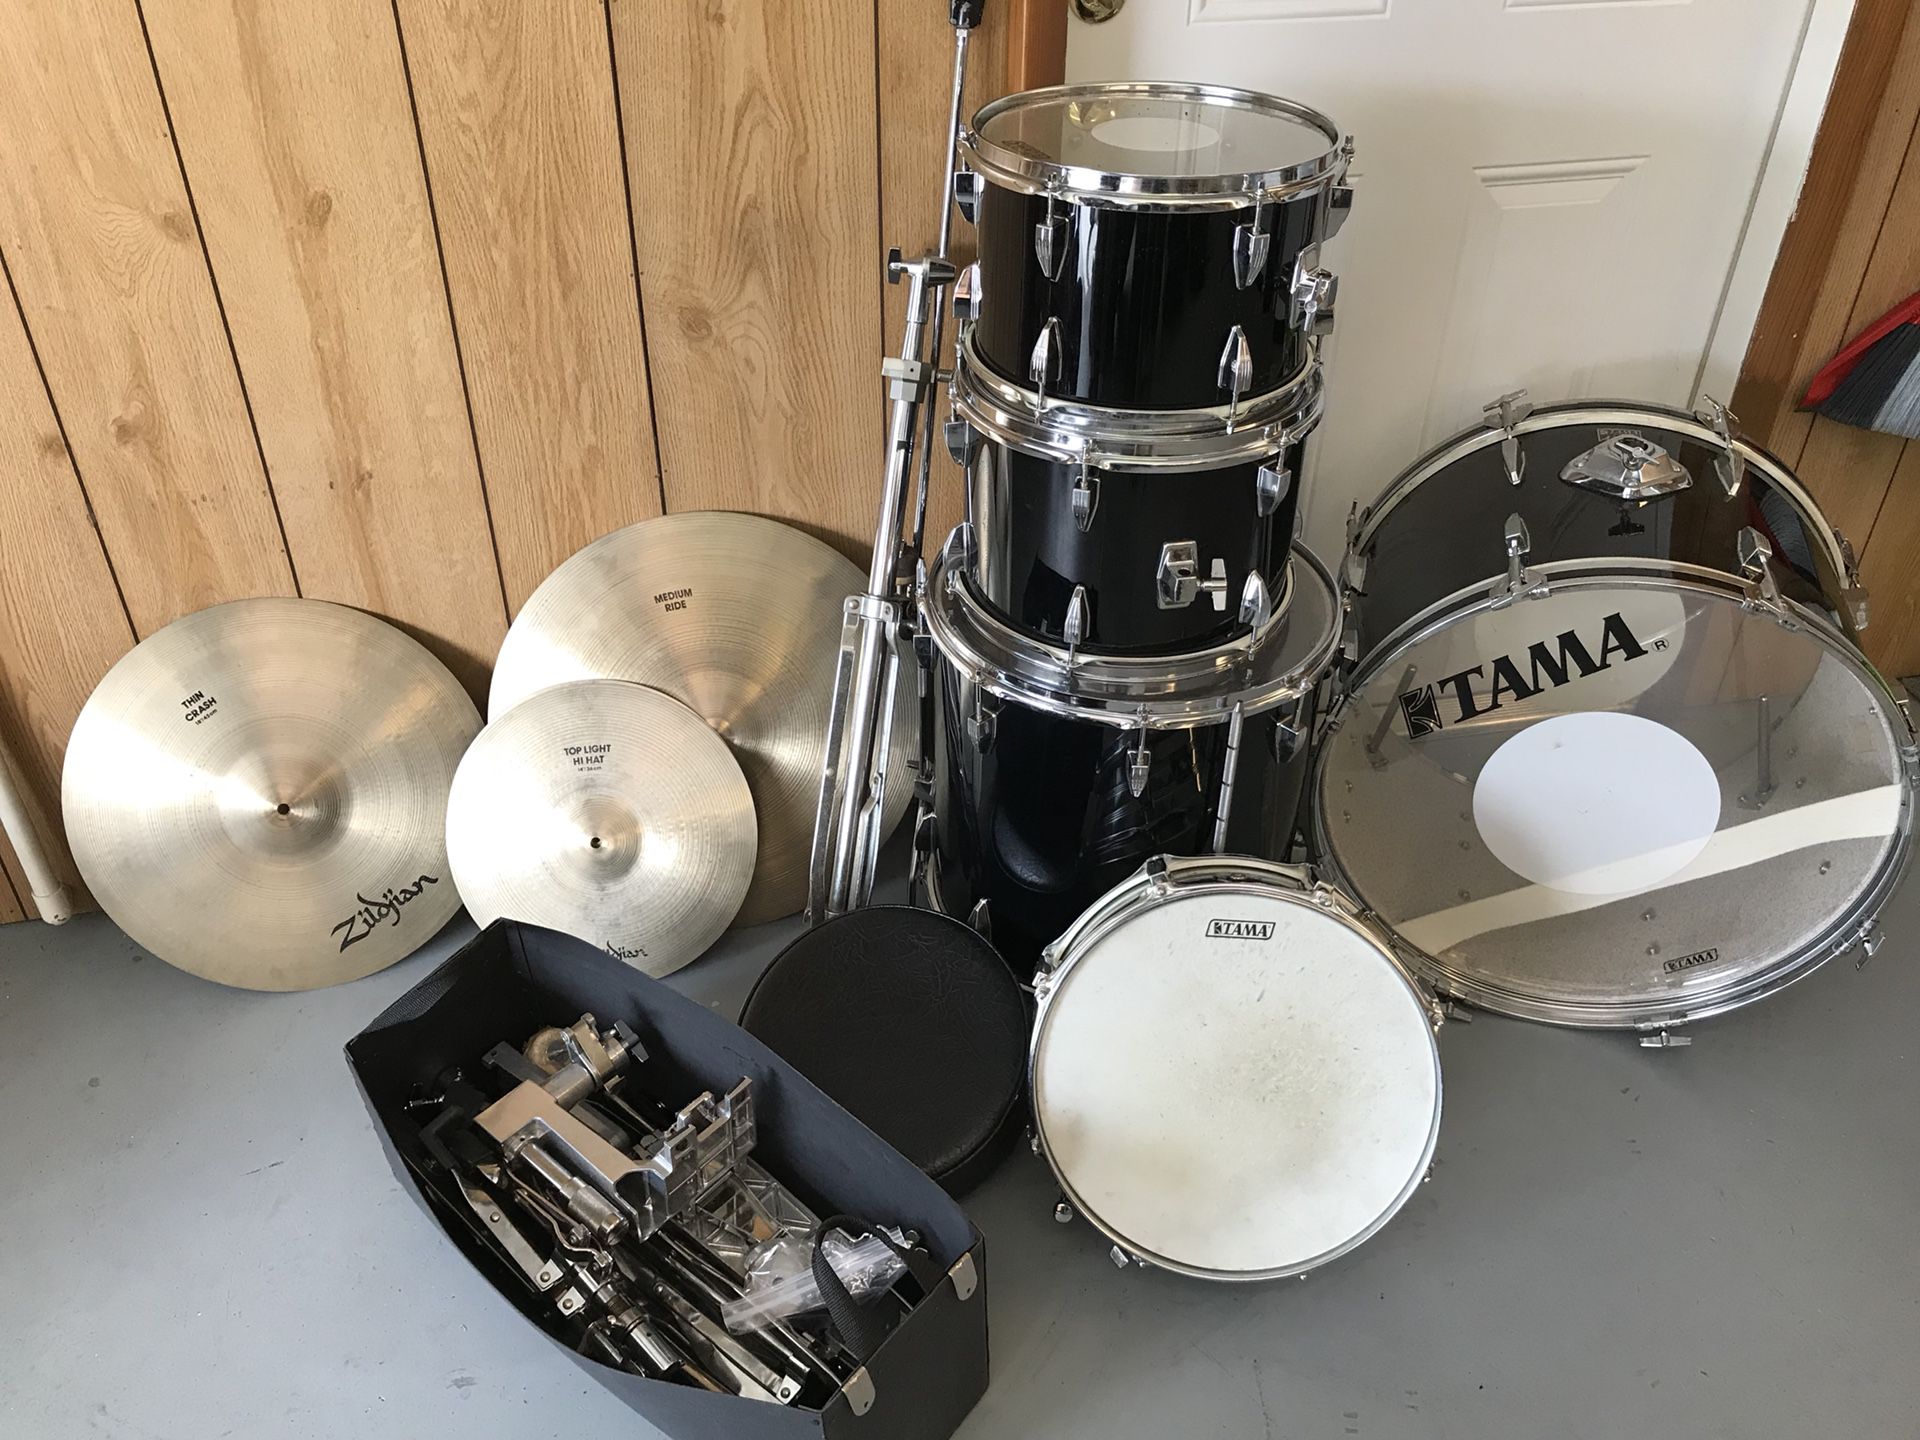 Tama drum set